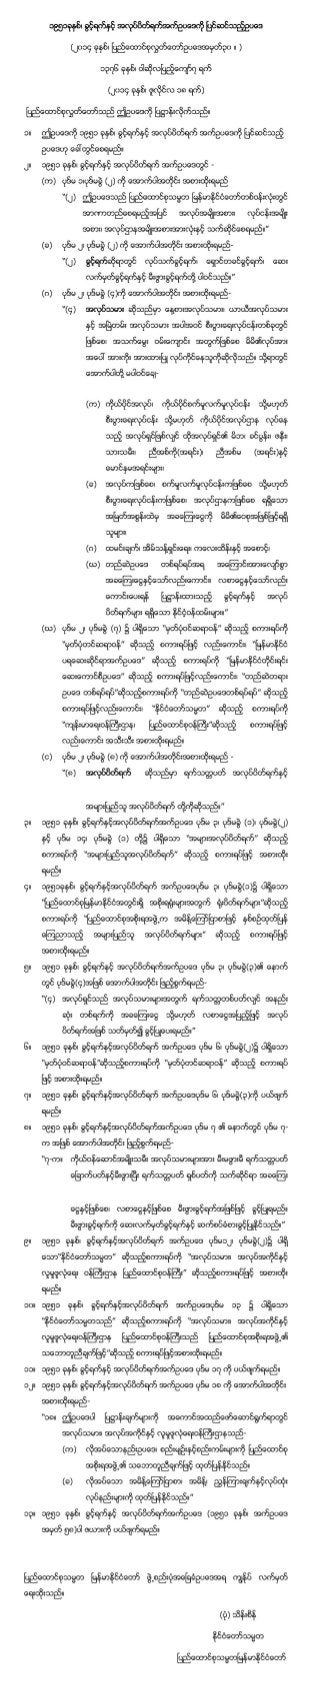 Leave  & Holiday Myanmar Amendment on 18 07 2014 